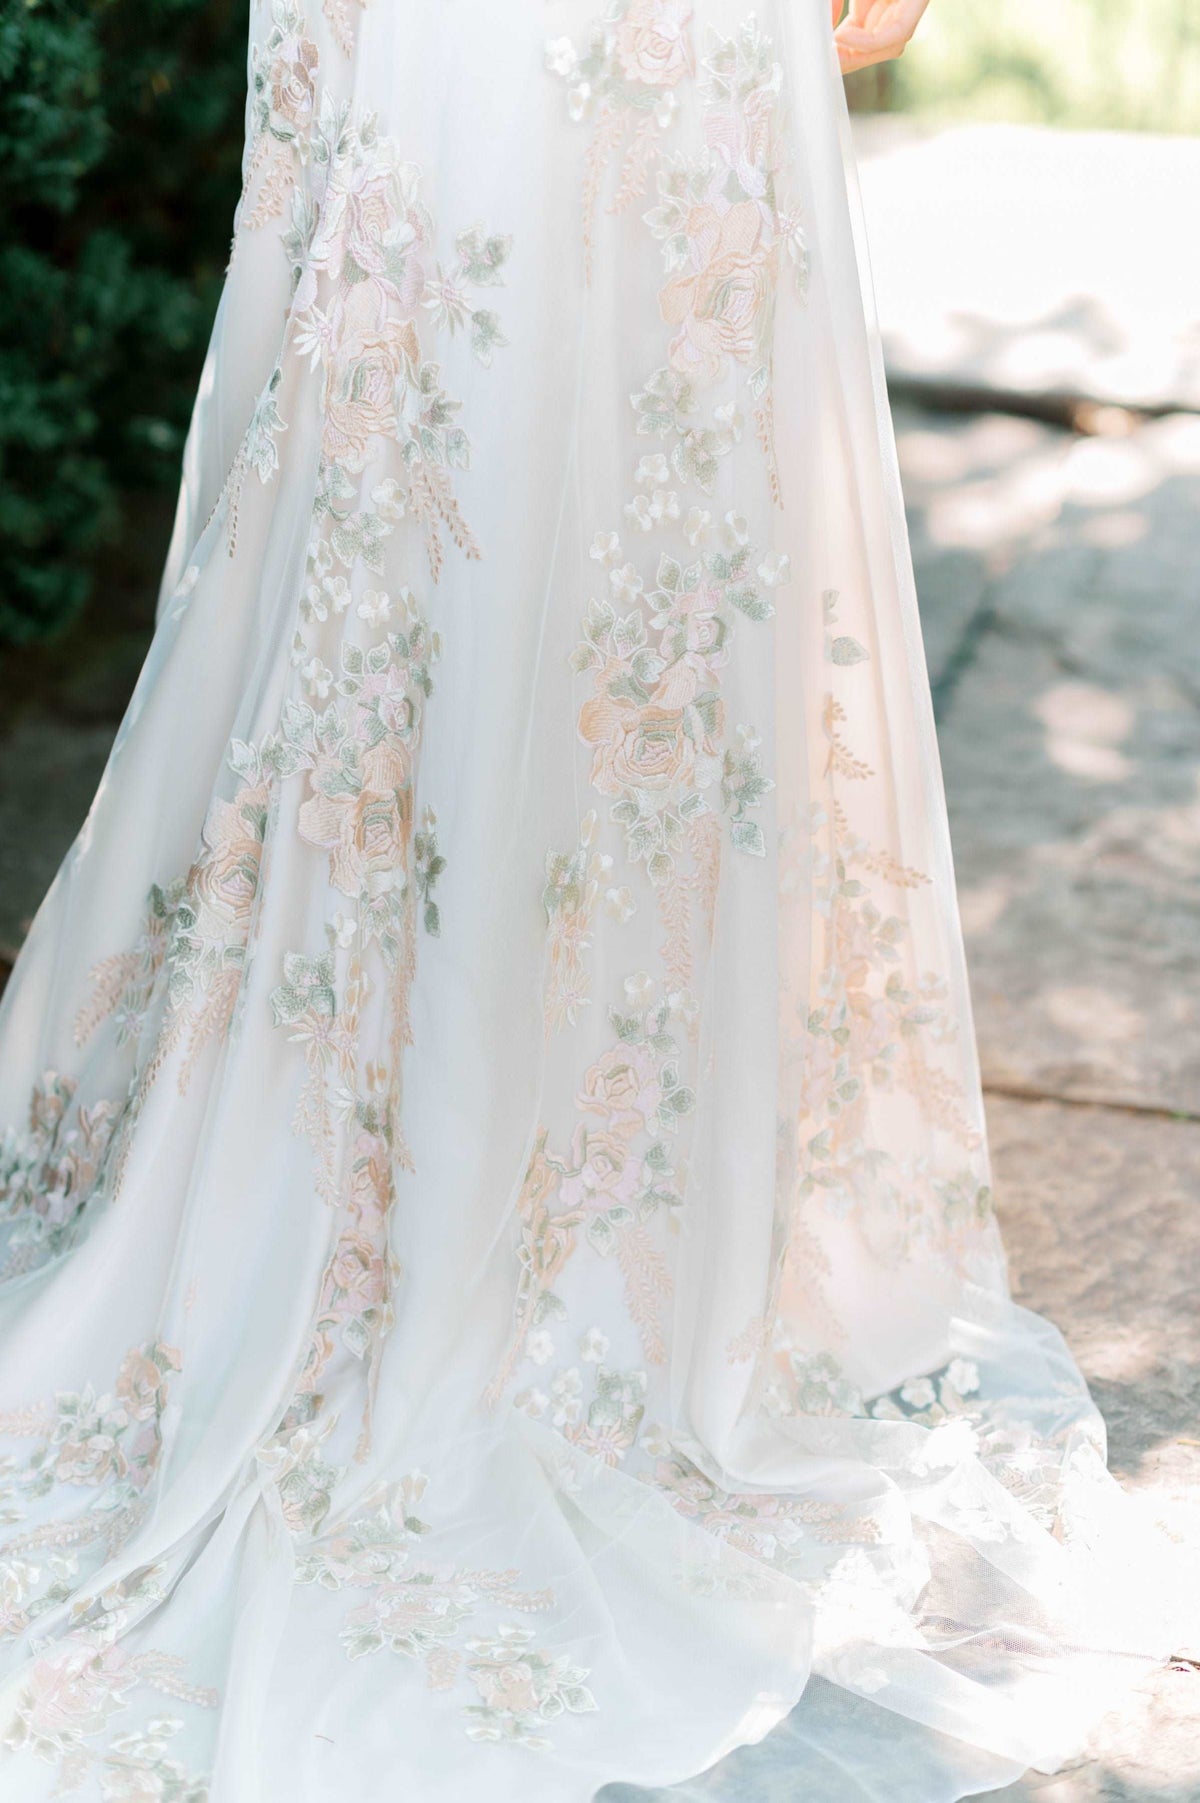 Floral A line wedding dress. . Colorful vintage floral lace wedding gown. Classic A line, elbow flutter sleeves, deep V neckline. Designed by Catherine Langlois Bridal, Canada.